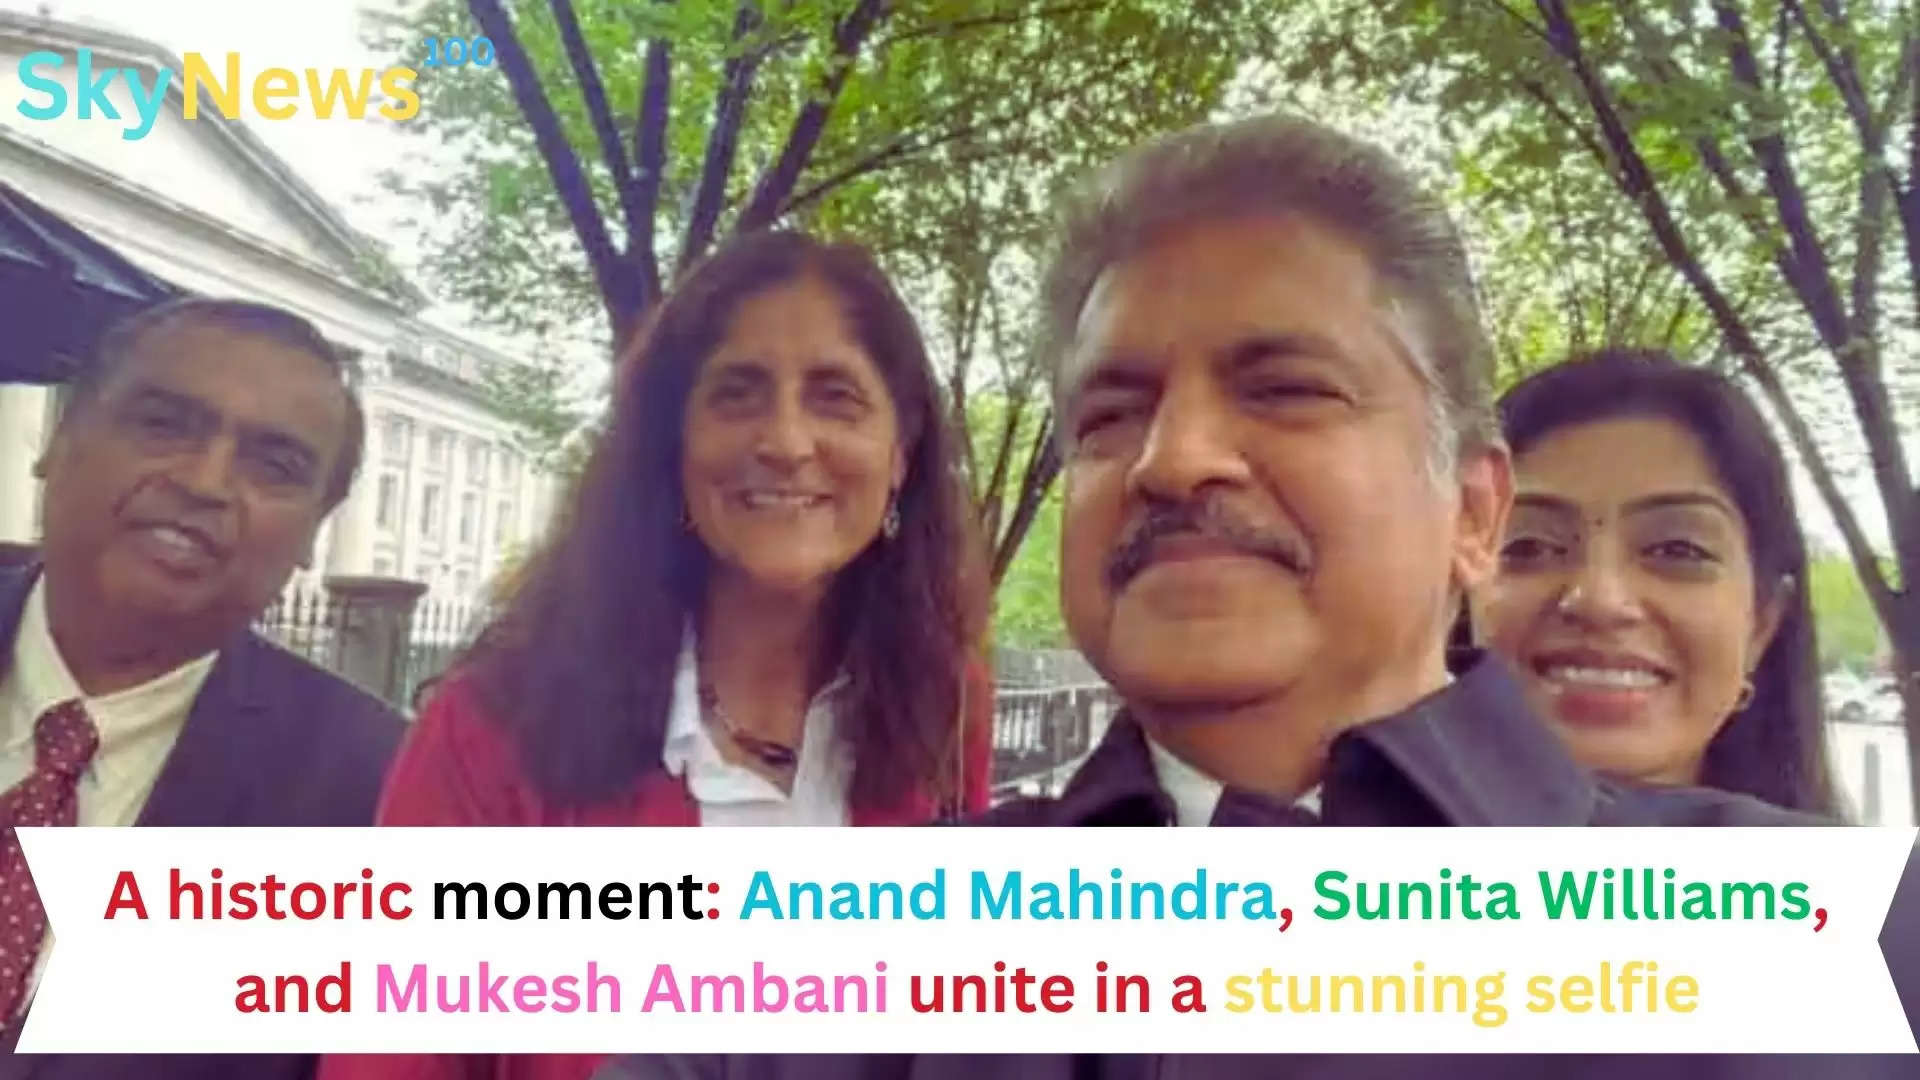 A historic moment: Anand Mahindra, Sunita Williams, and Mukesh Ambani unite in a stunning selfie